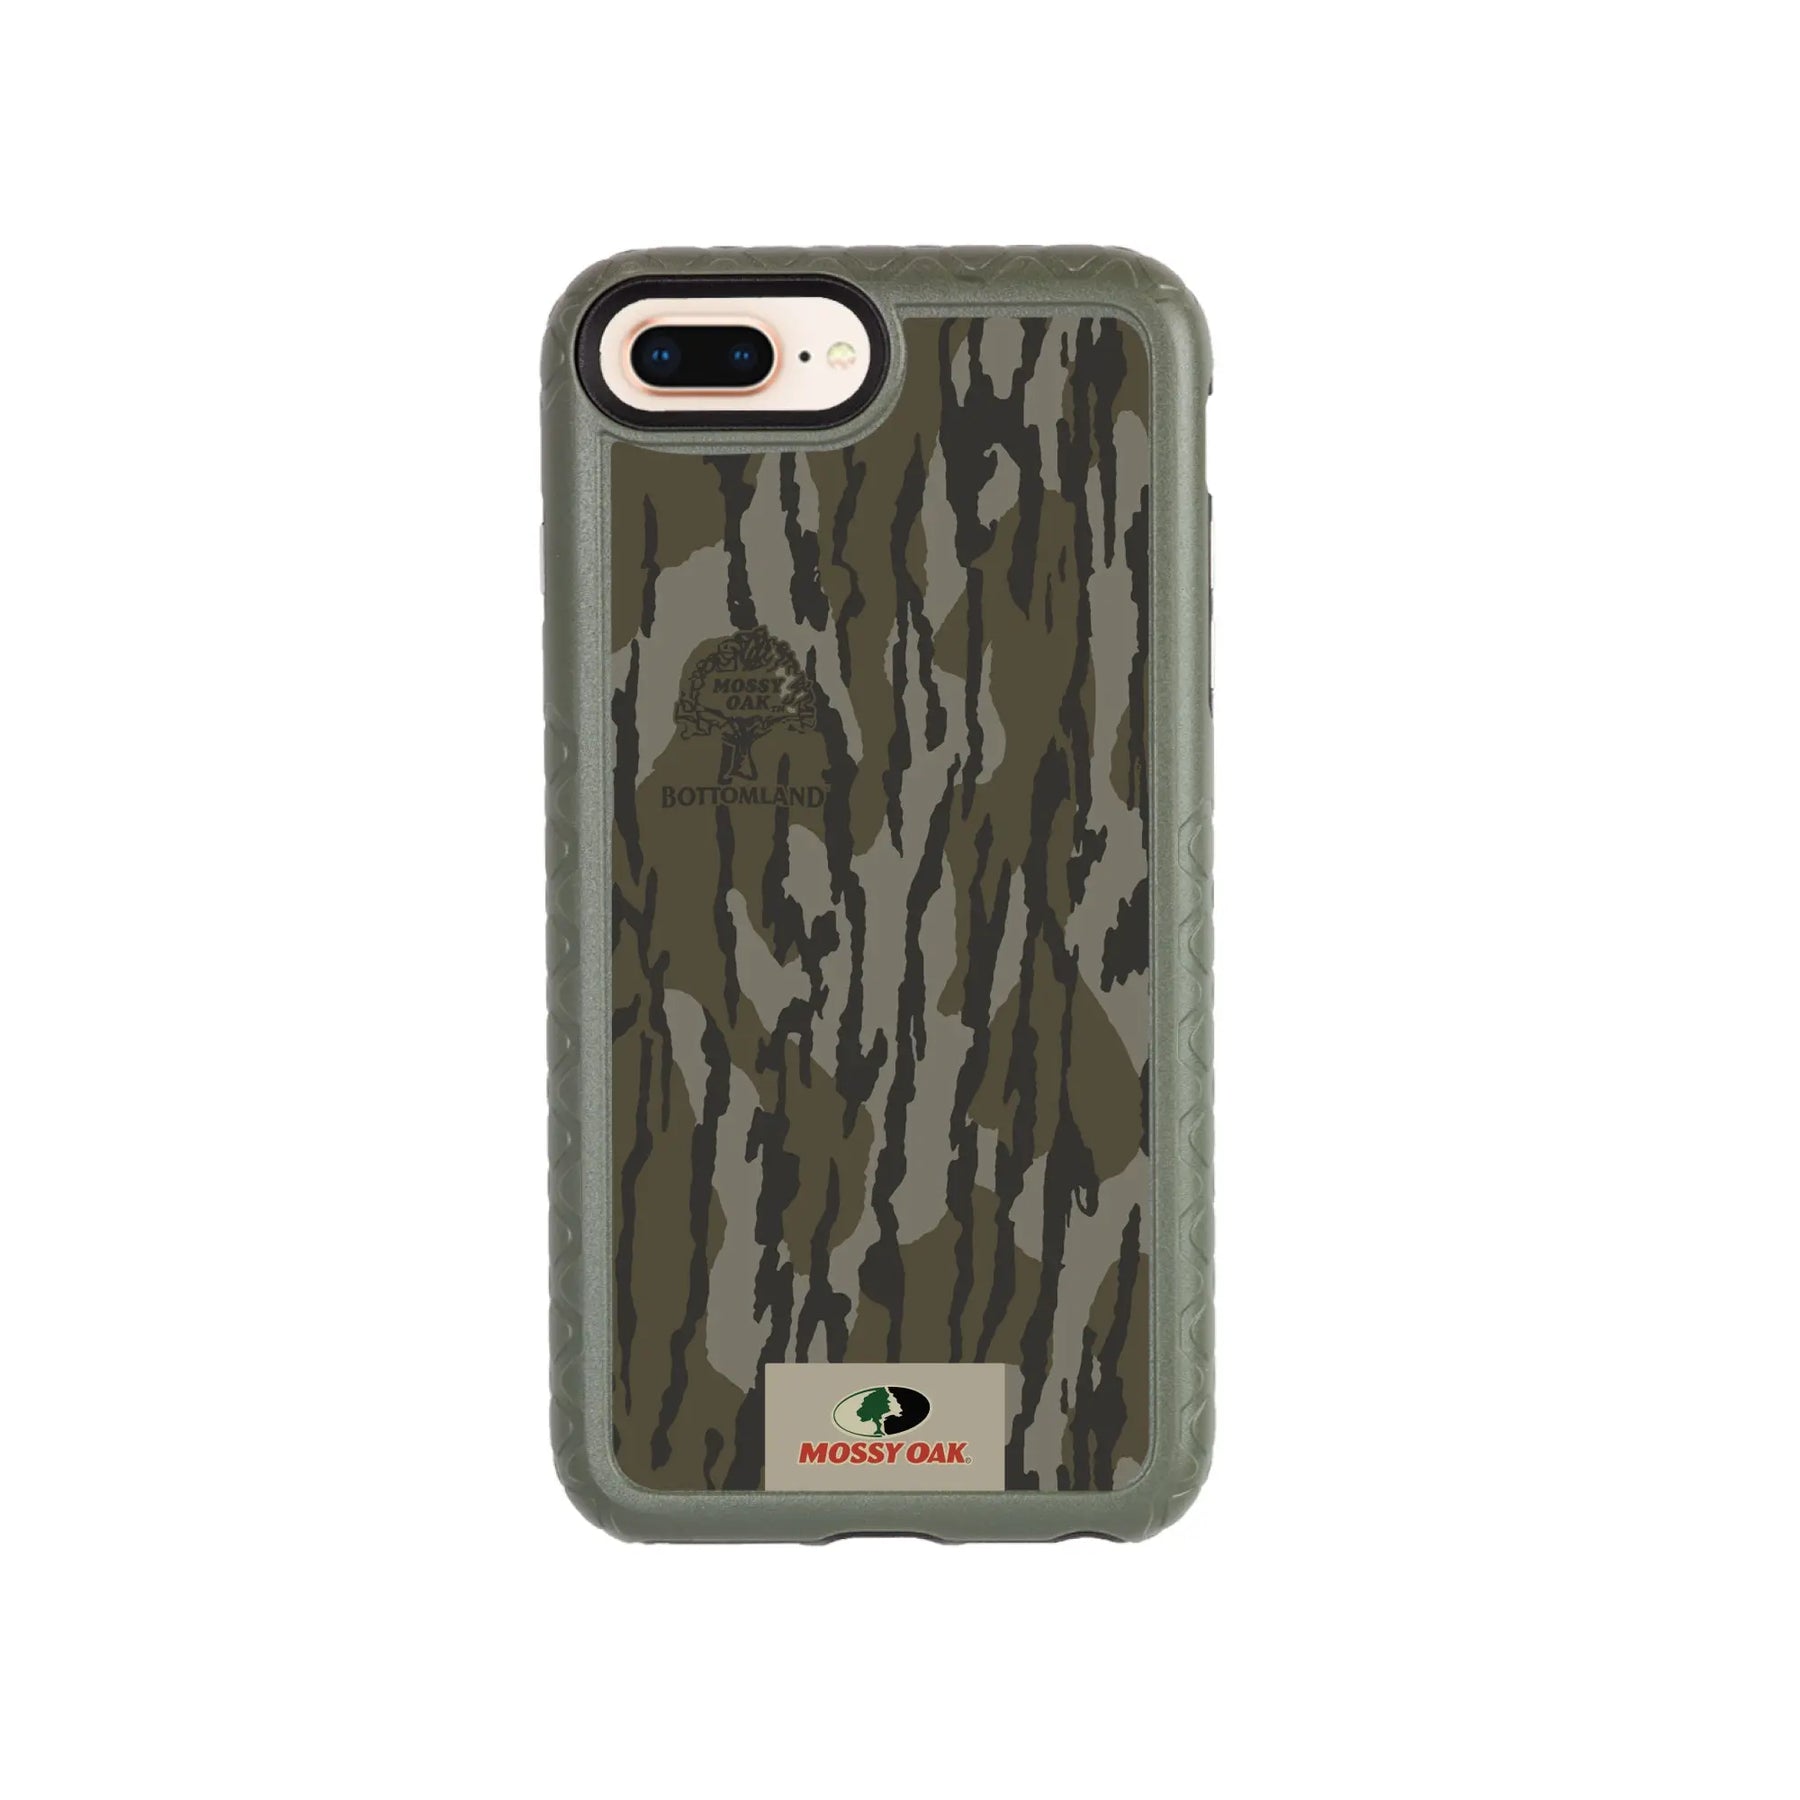 Mossy Oak Fortitude Series for Apple iPhone 6/7/8 Plus - Bottomland Orig - Custom Case - OliveDrabGreen - cellhelmet